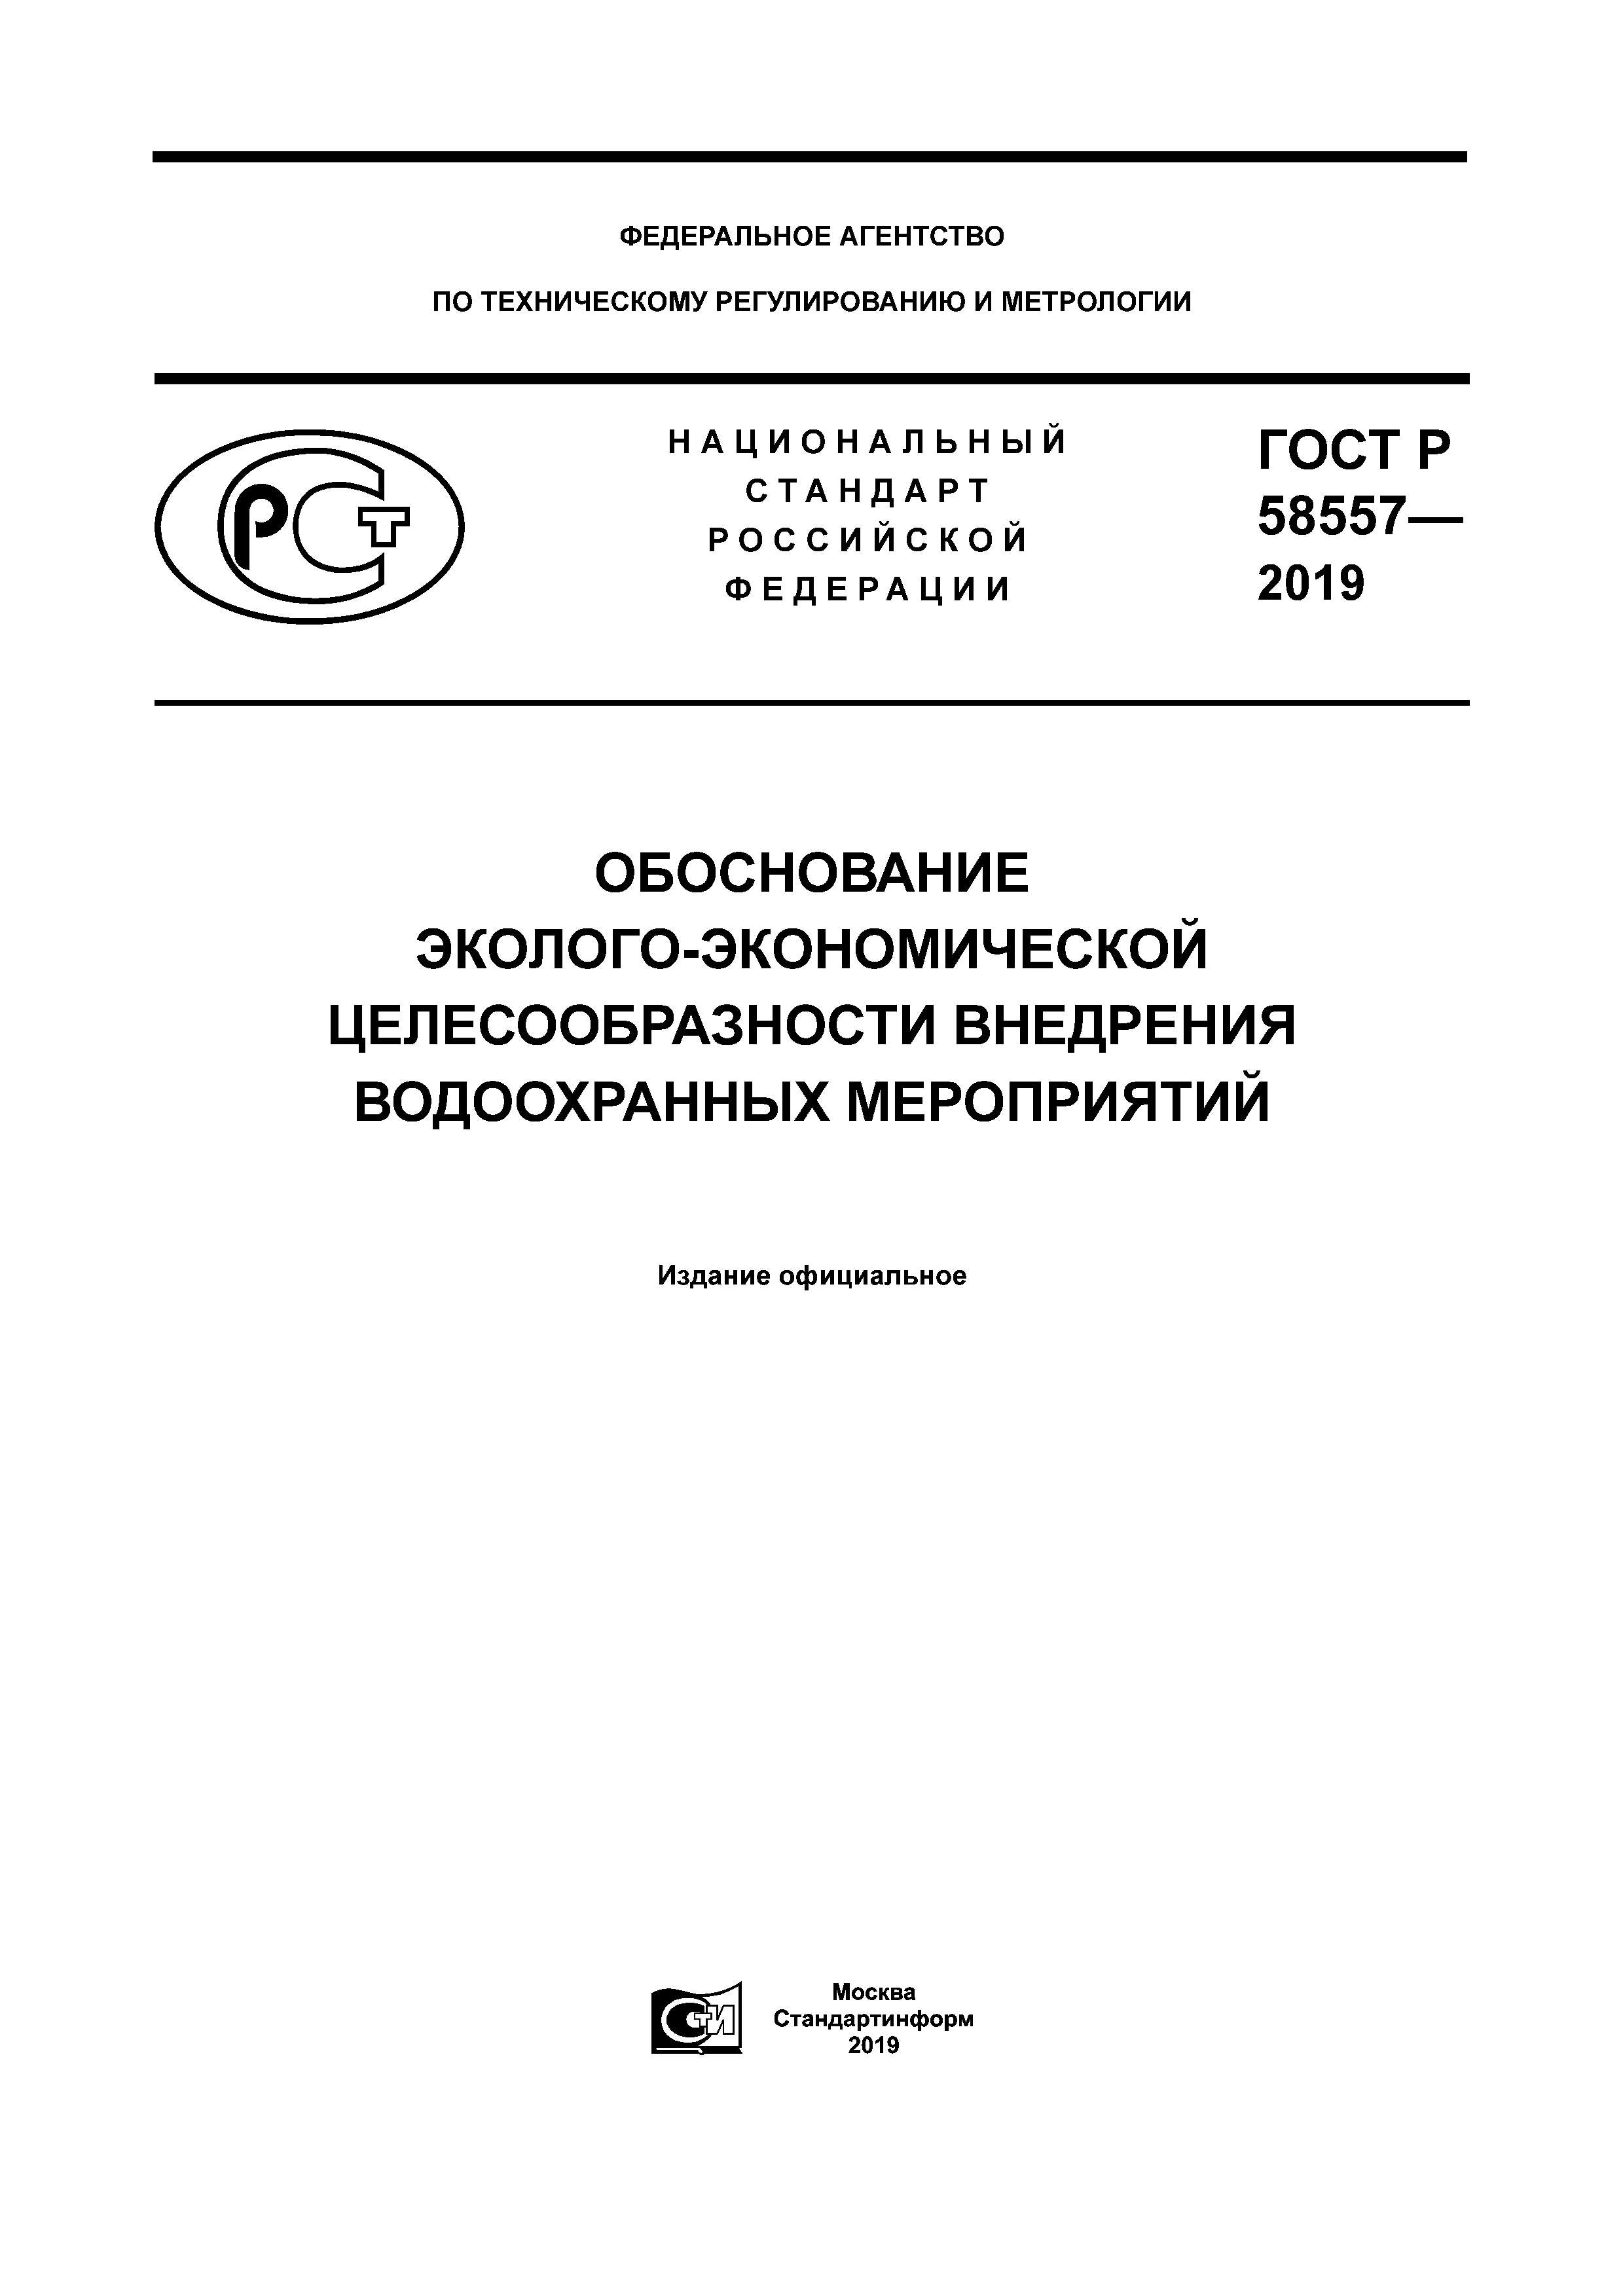 ГОСТ Р 58557-2019